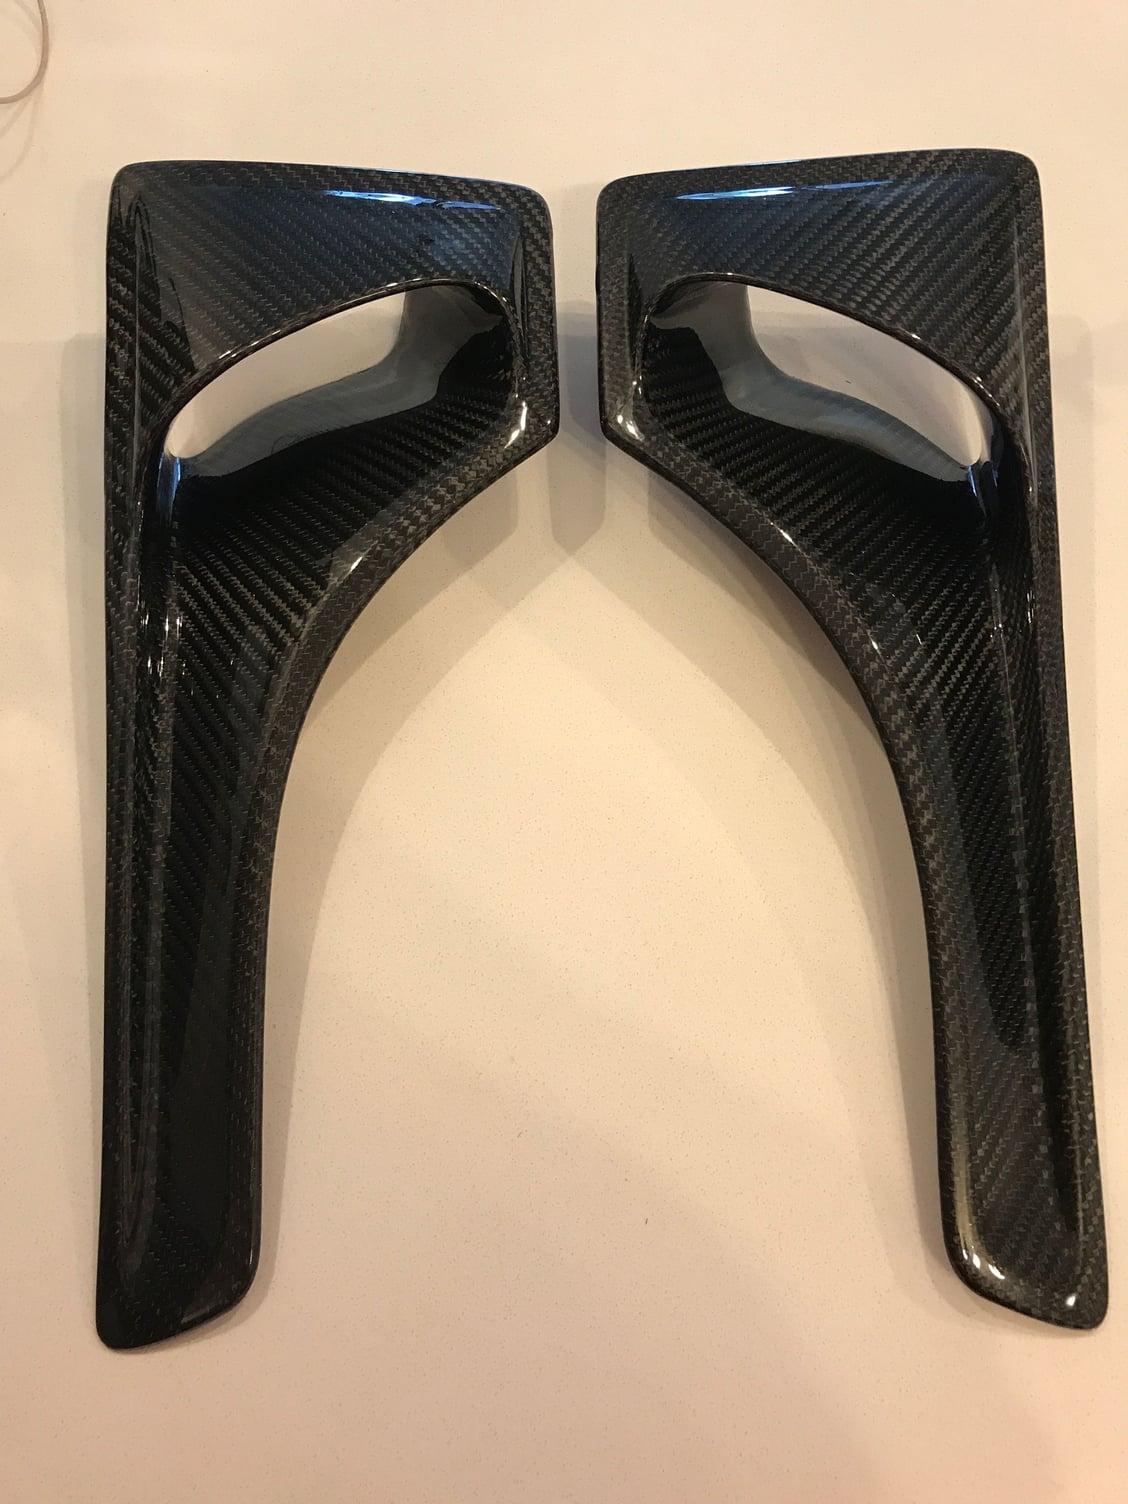 WTB (Want To Buy) Carbon Fiber Brake Ducts - CorvetteForum ...